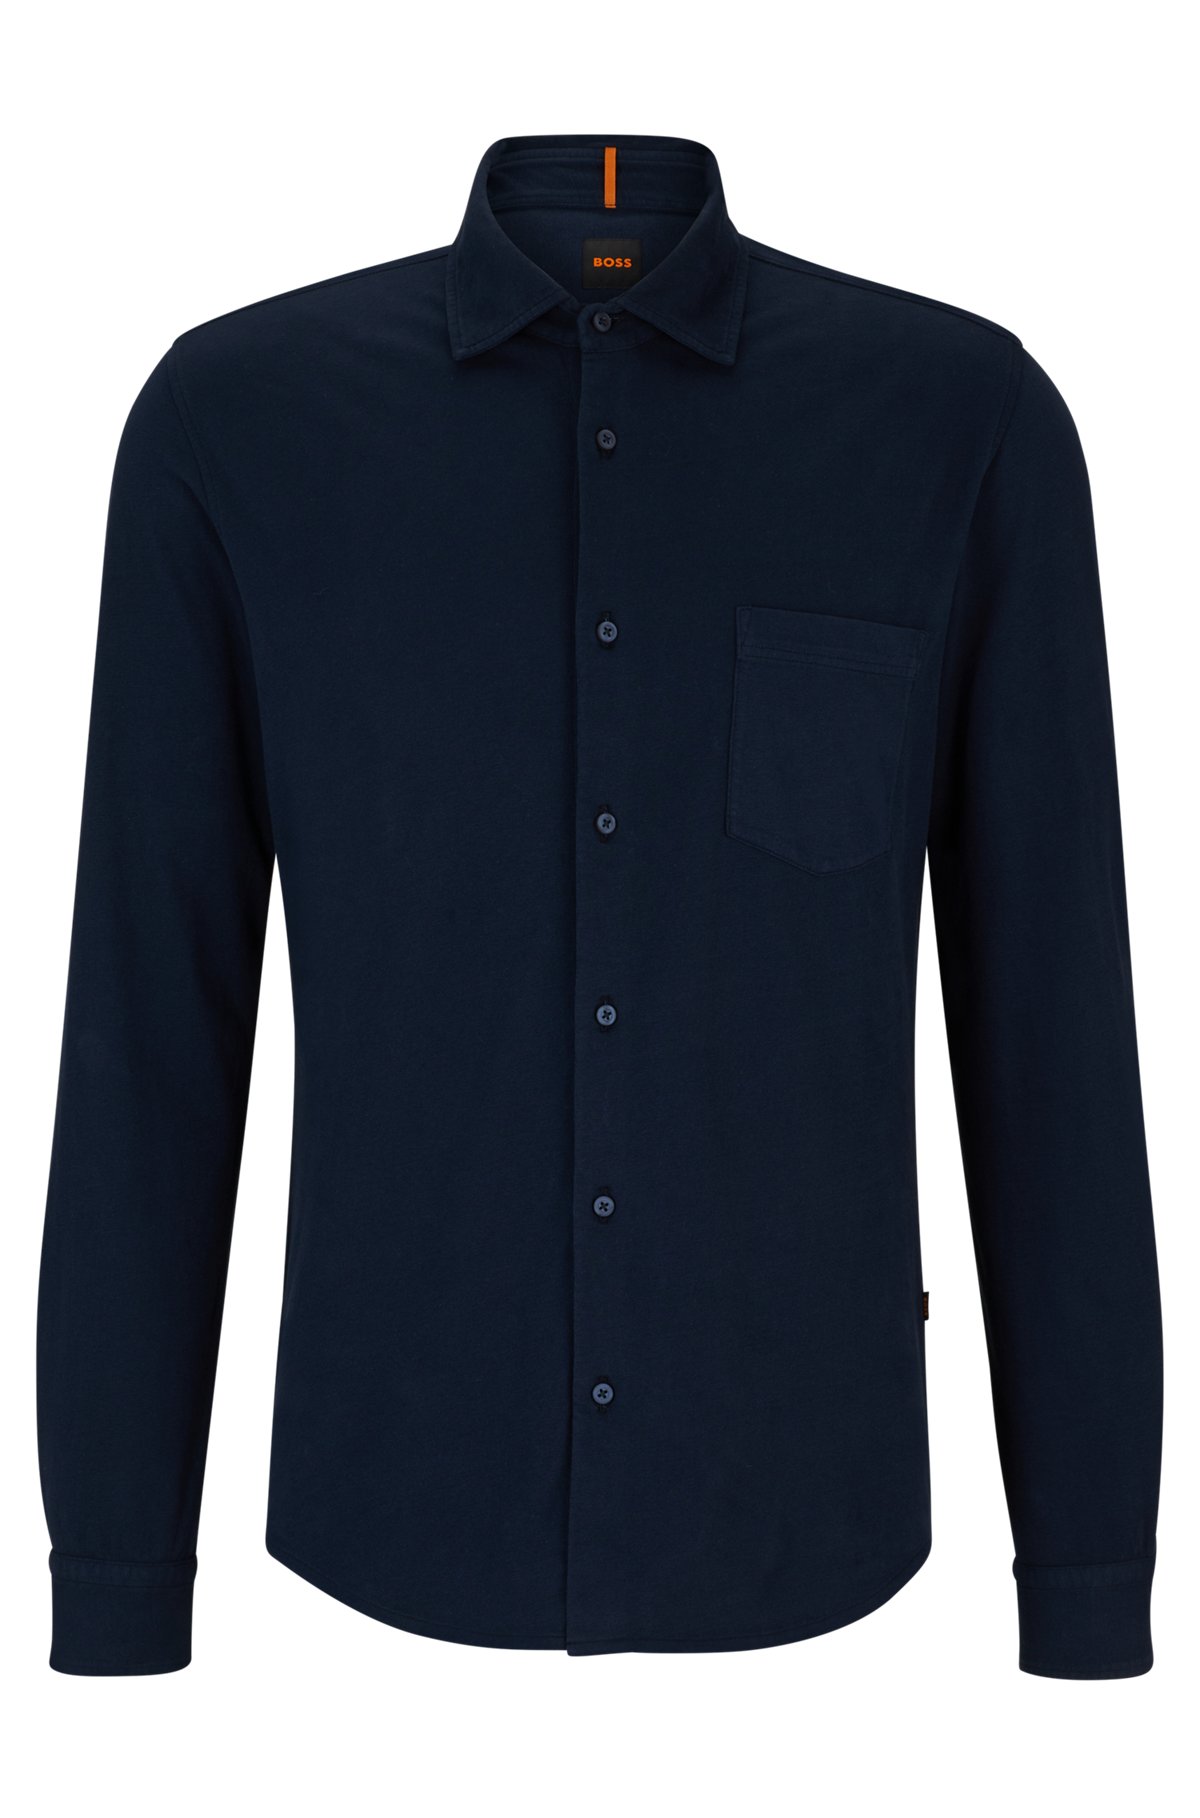 Garment-dyed slim-fit shirt in cotton jersey, Dark Blue